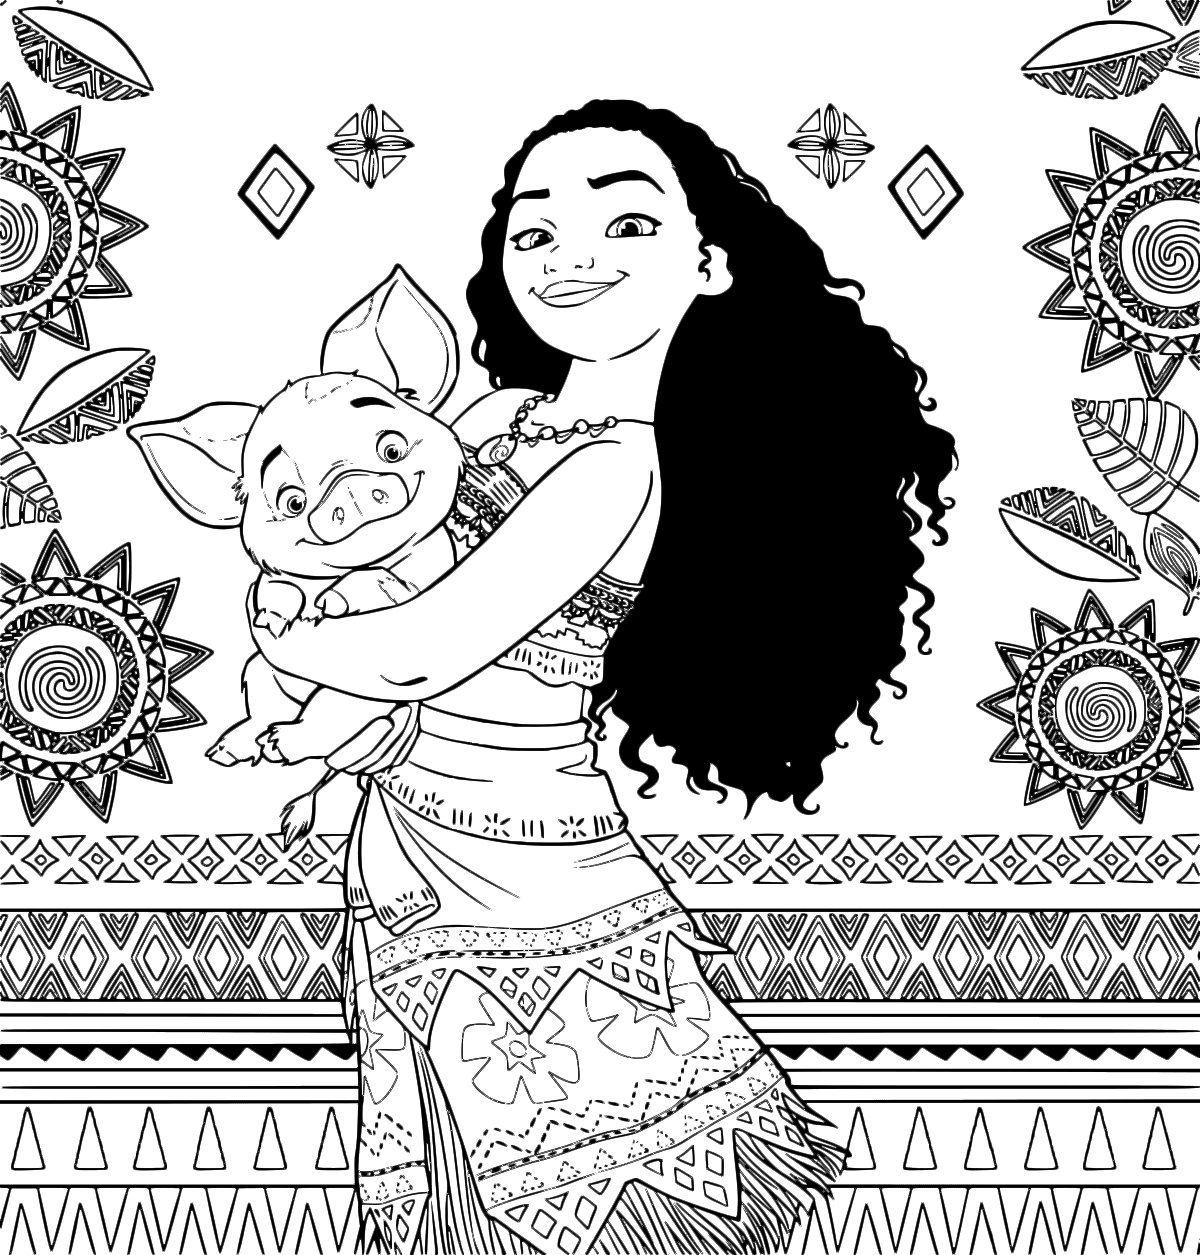 Oceania - La principessa Vaiana con il maialino vietnamita Pua